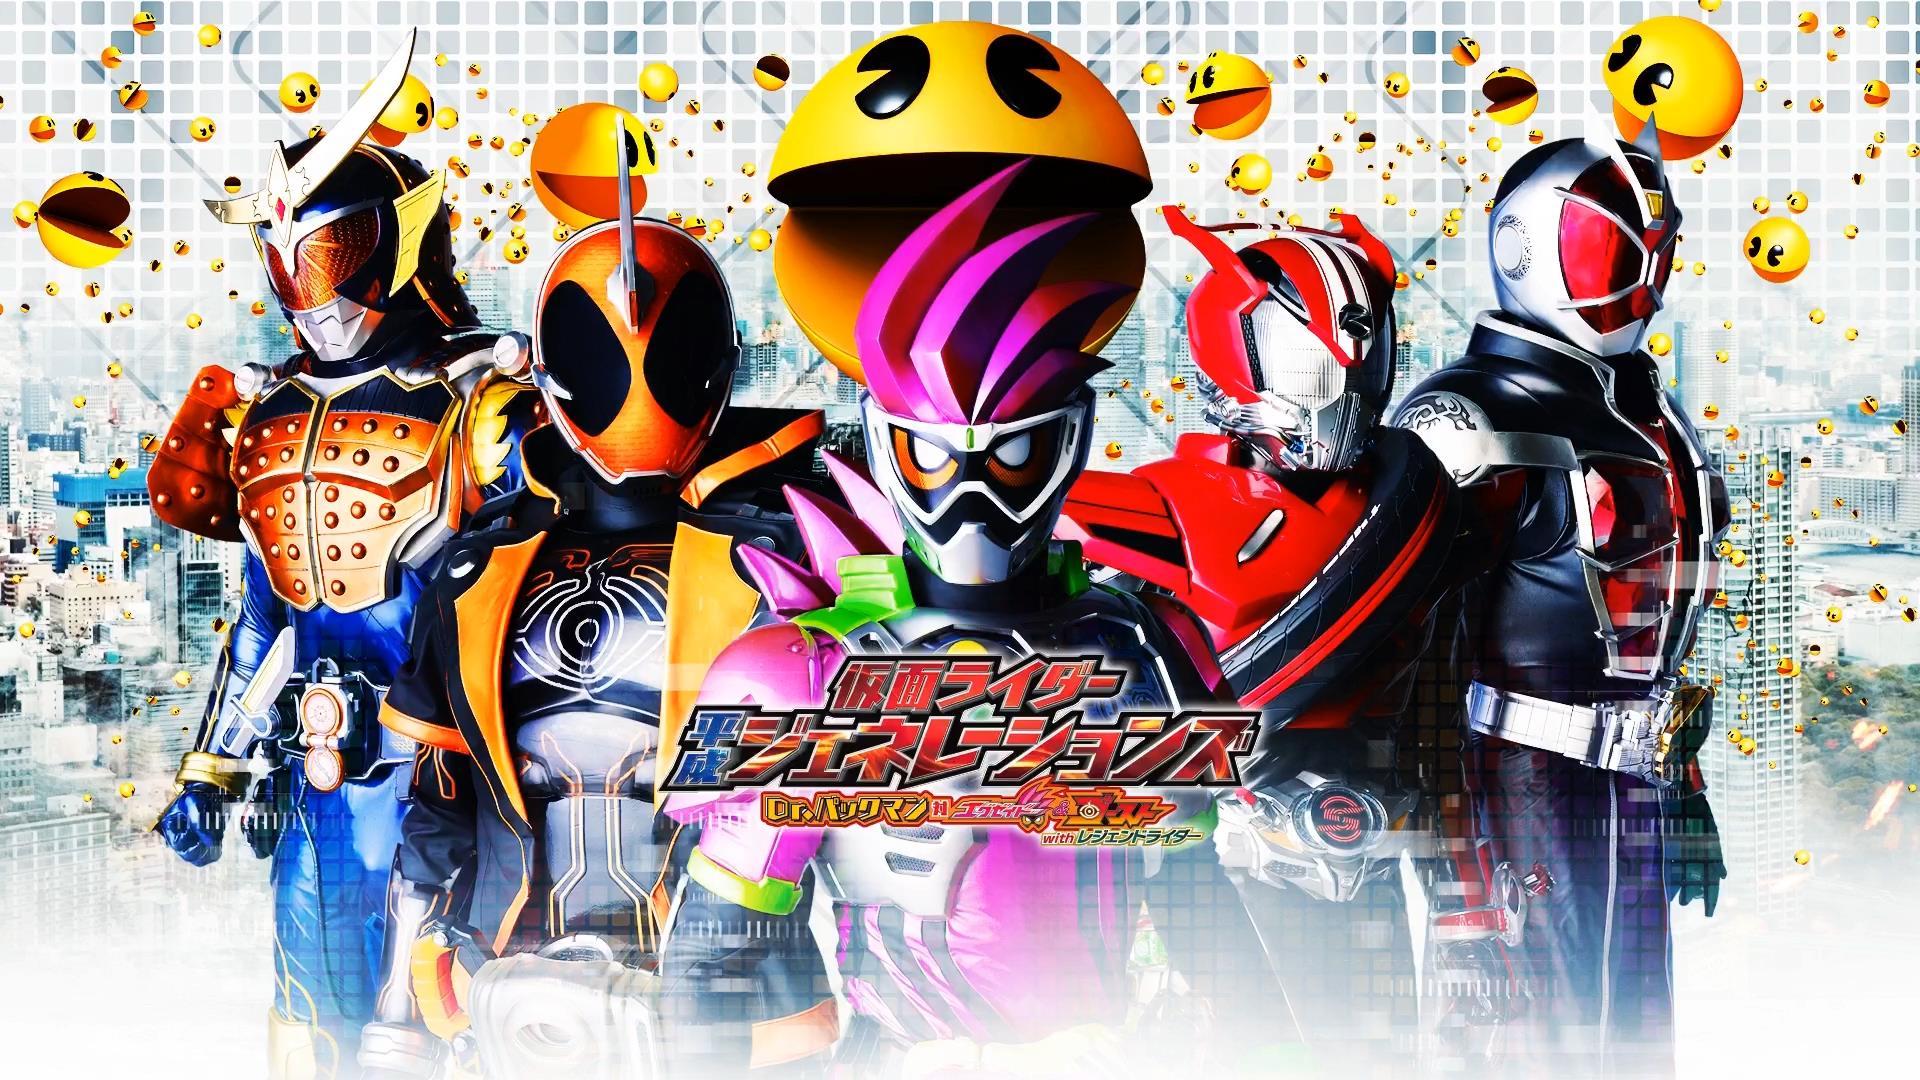 Kamen Rider Heisei Generations: Dr. Pac Man VS Ex Aid & Ghost